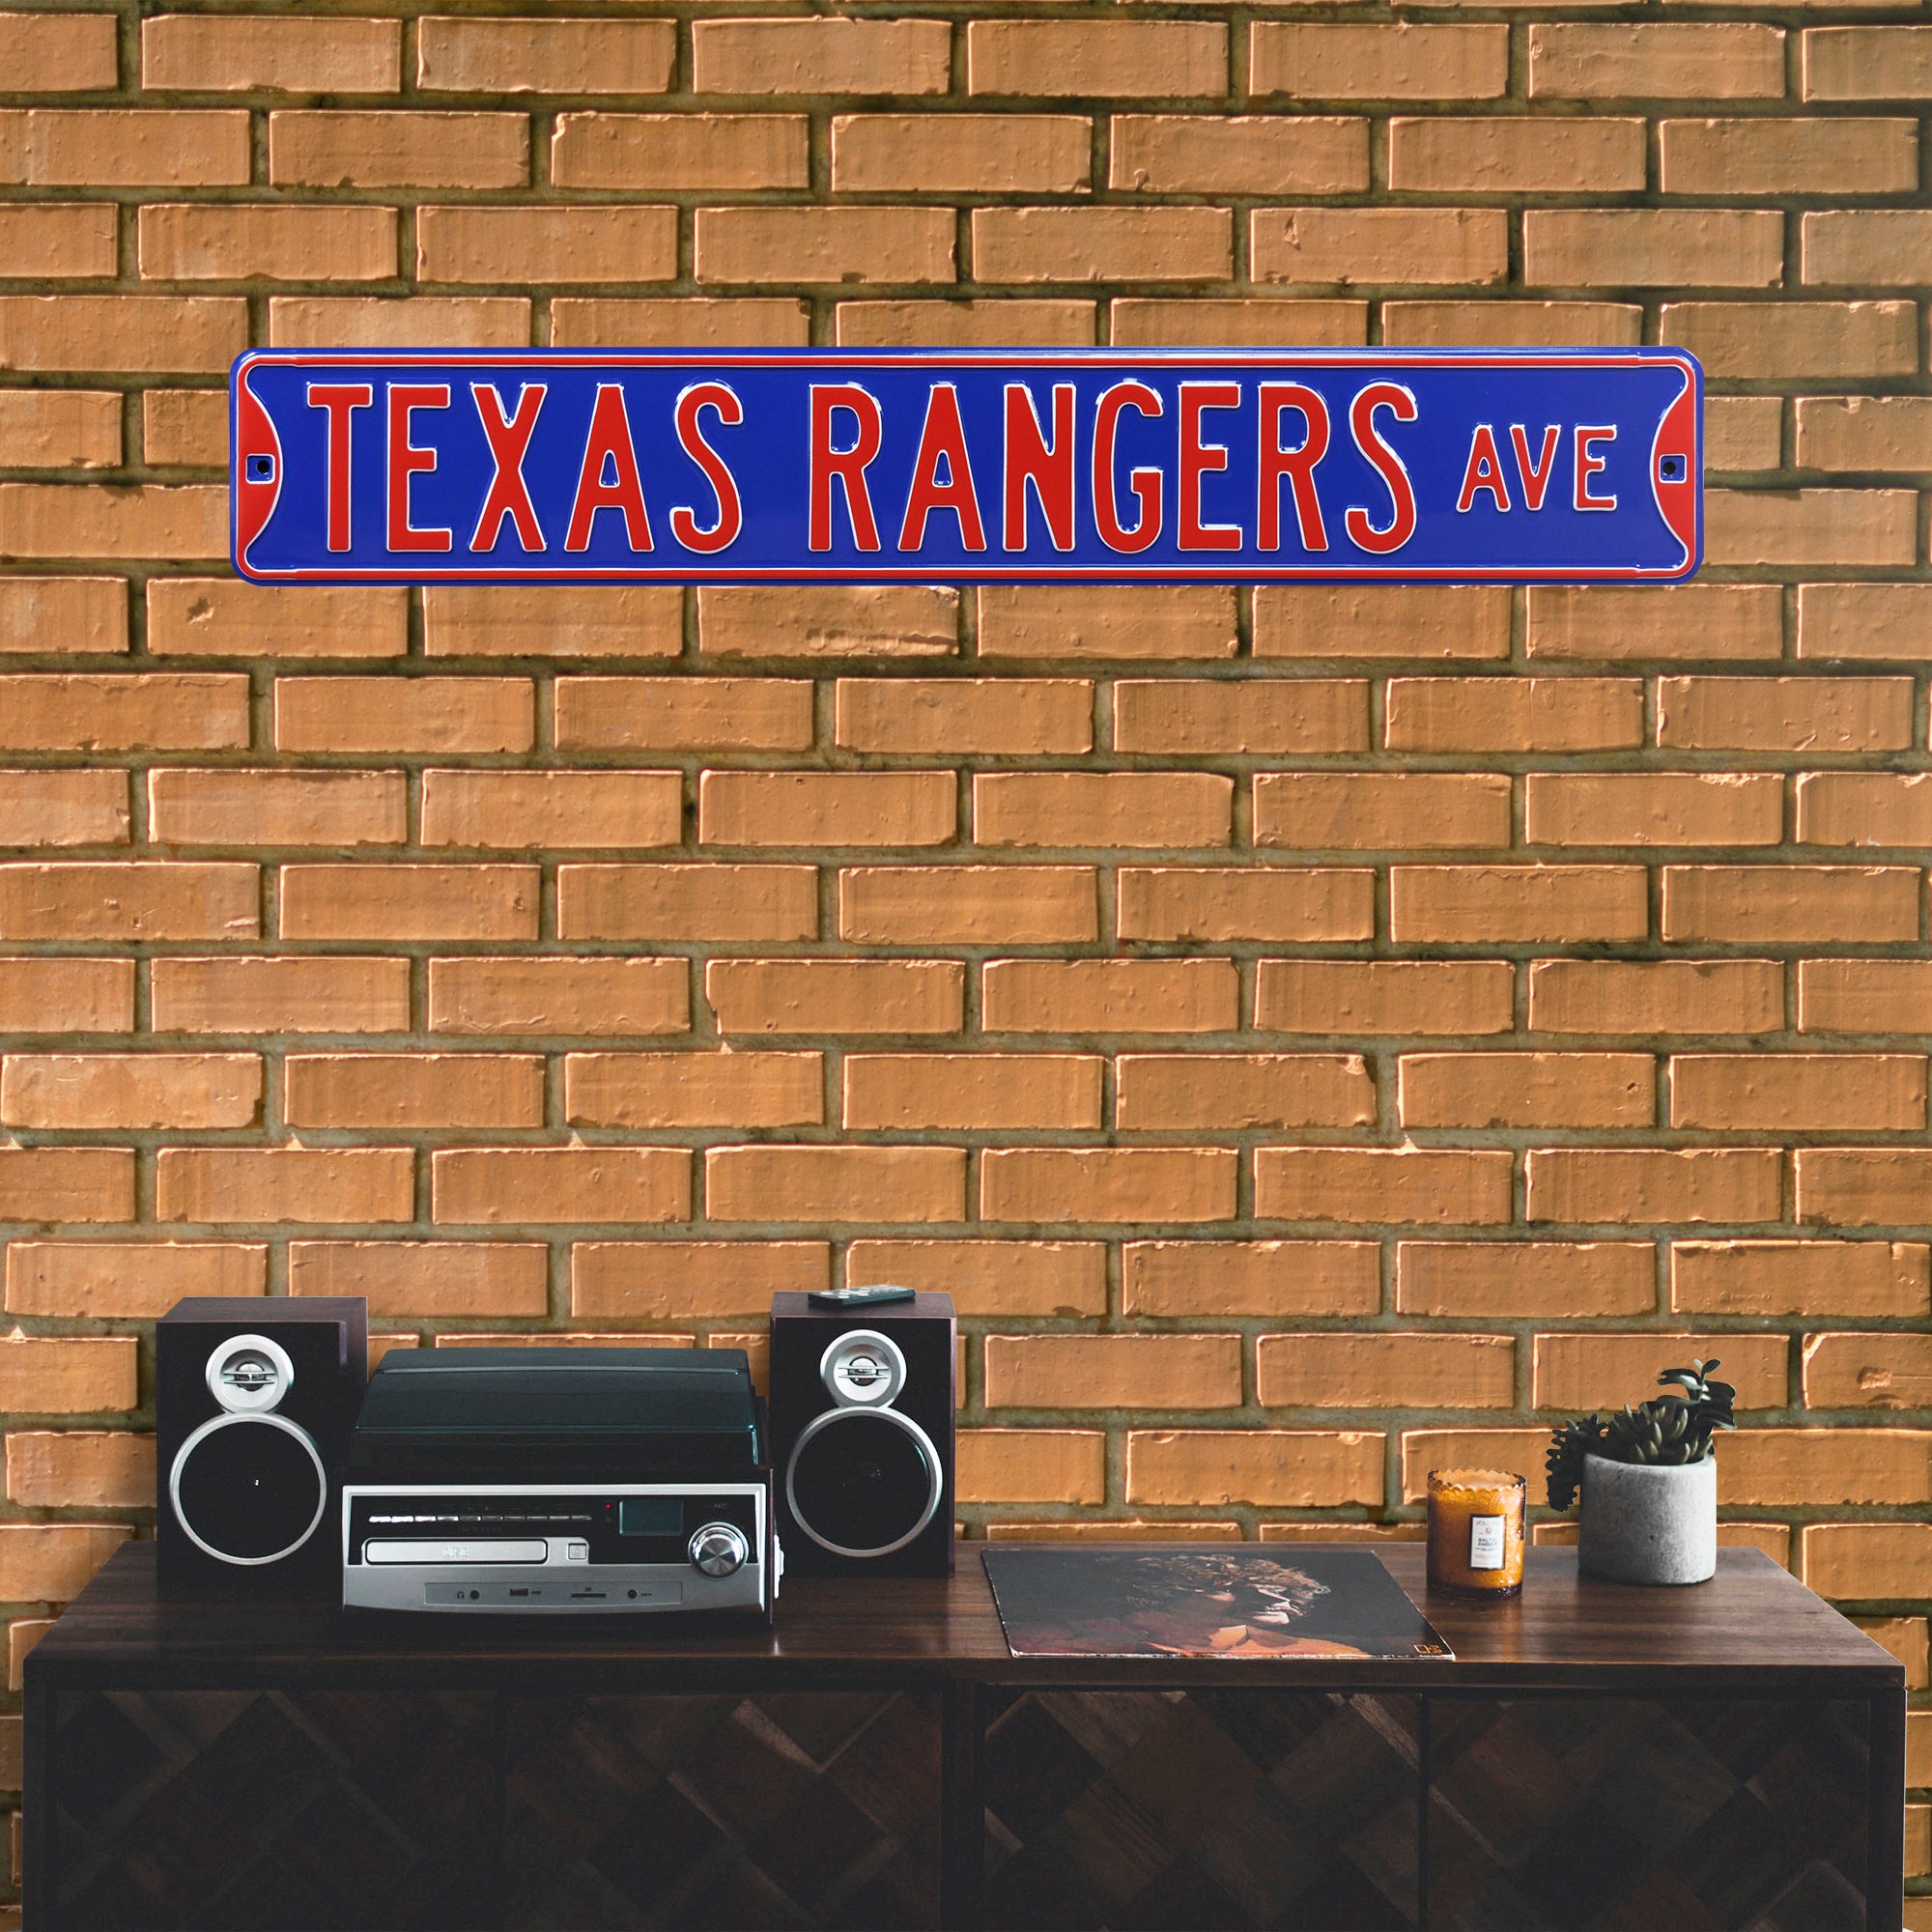 Texas Rangers Steel Street Sign-TEXAS RANGERS AVE 36" W x 6" H by Fathead